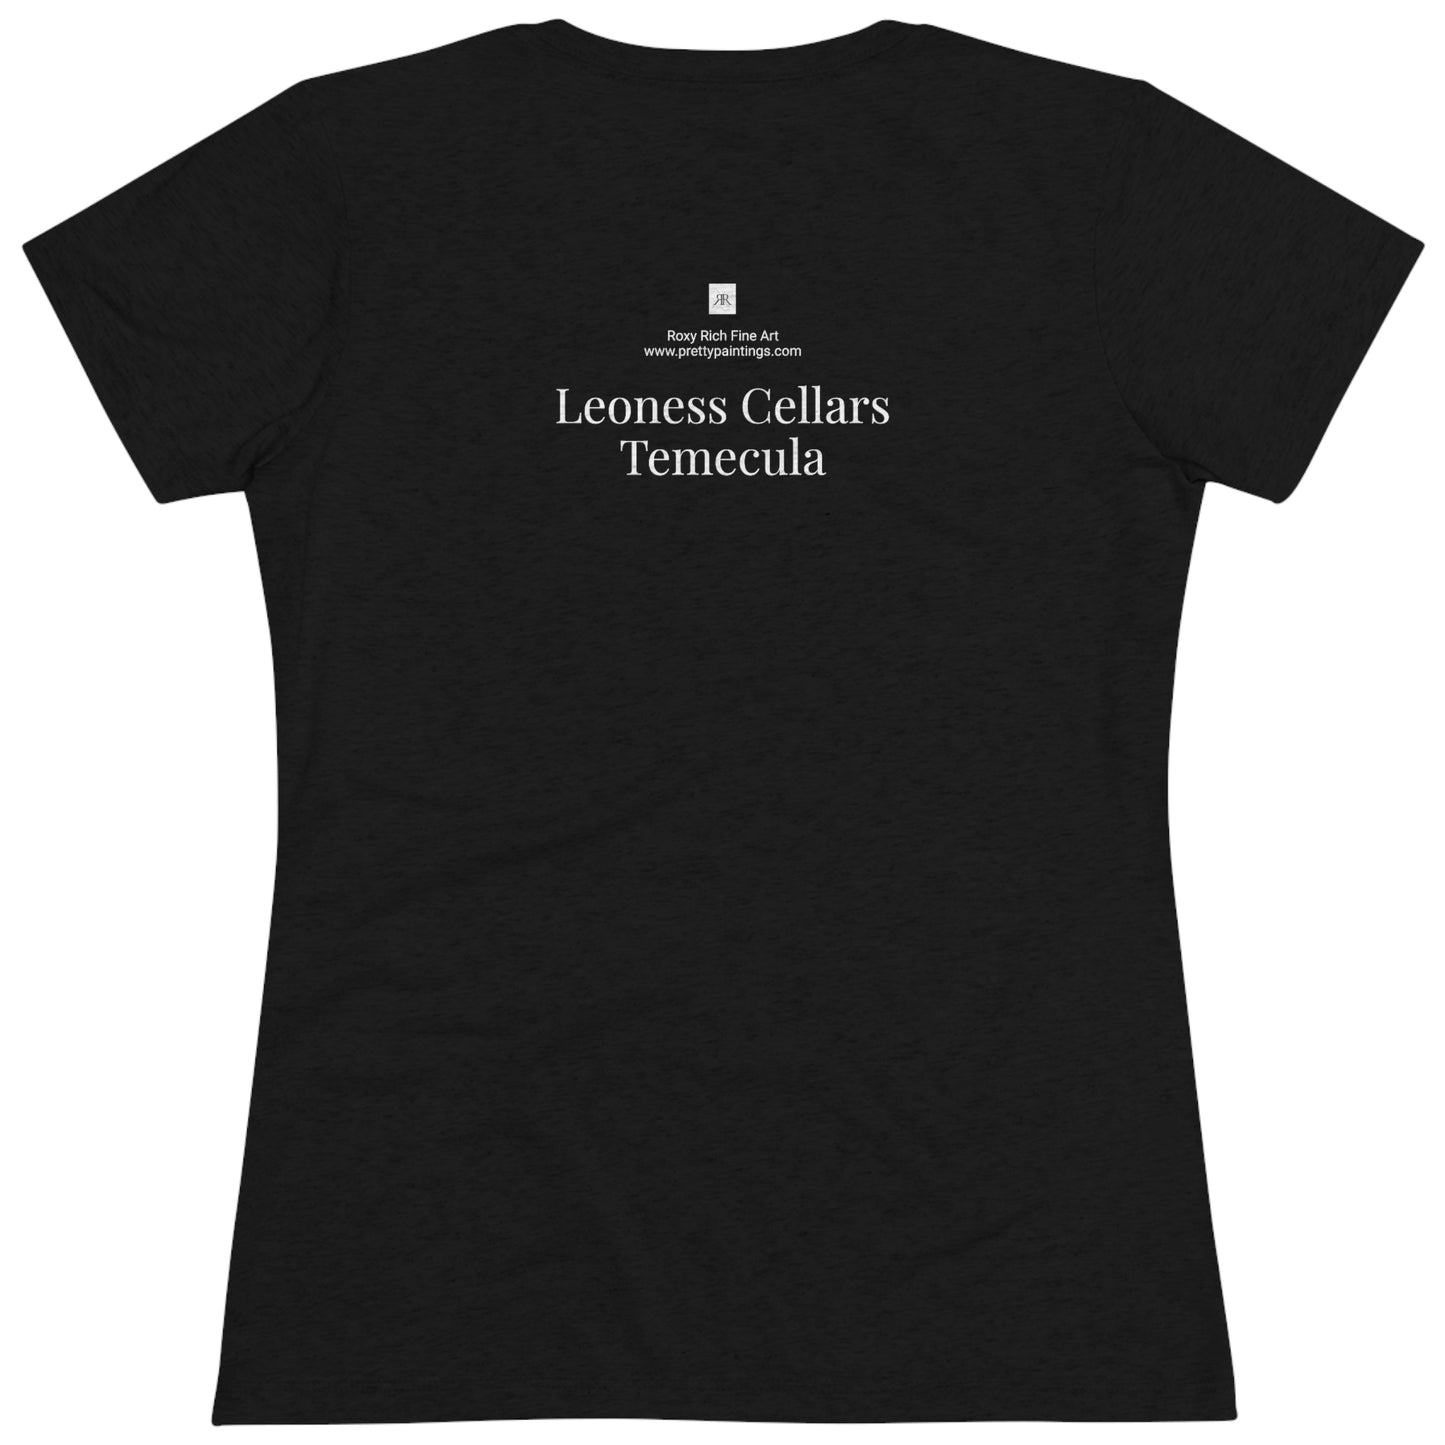 Leoness Cellars (ese día nevó) Temecula Camiseta Triblend ajustada para mujer